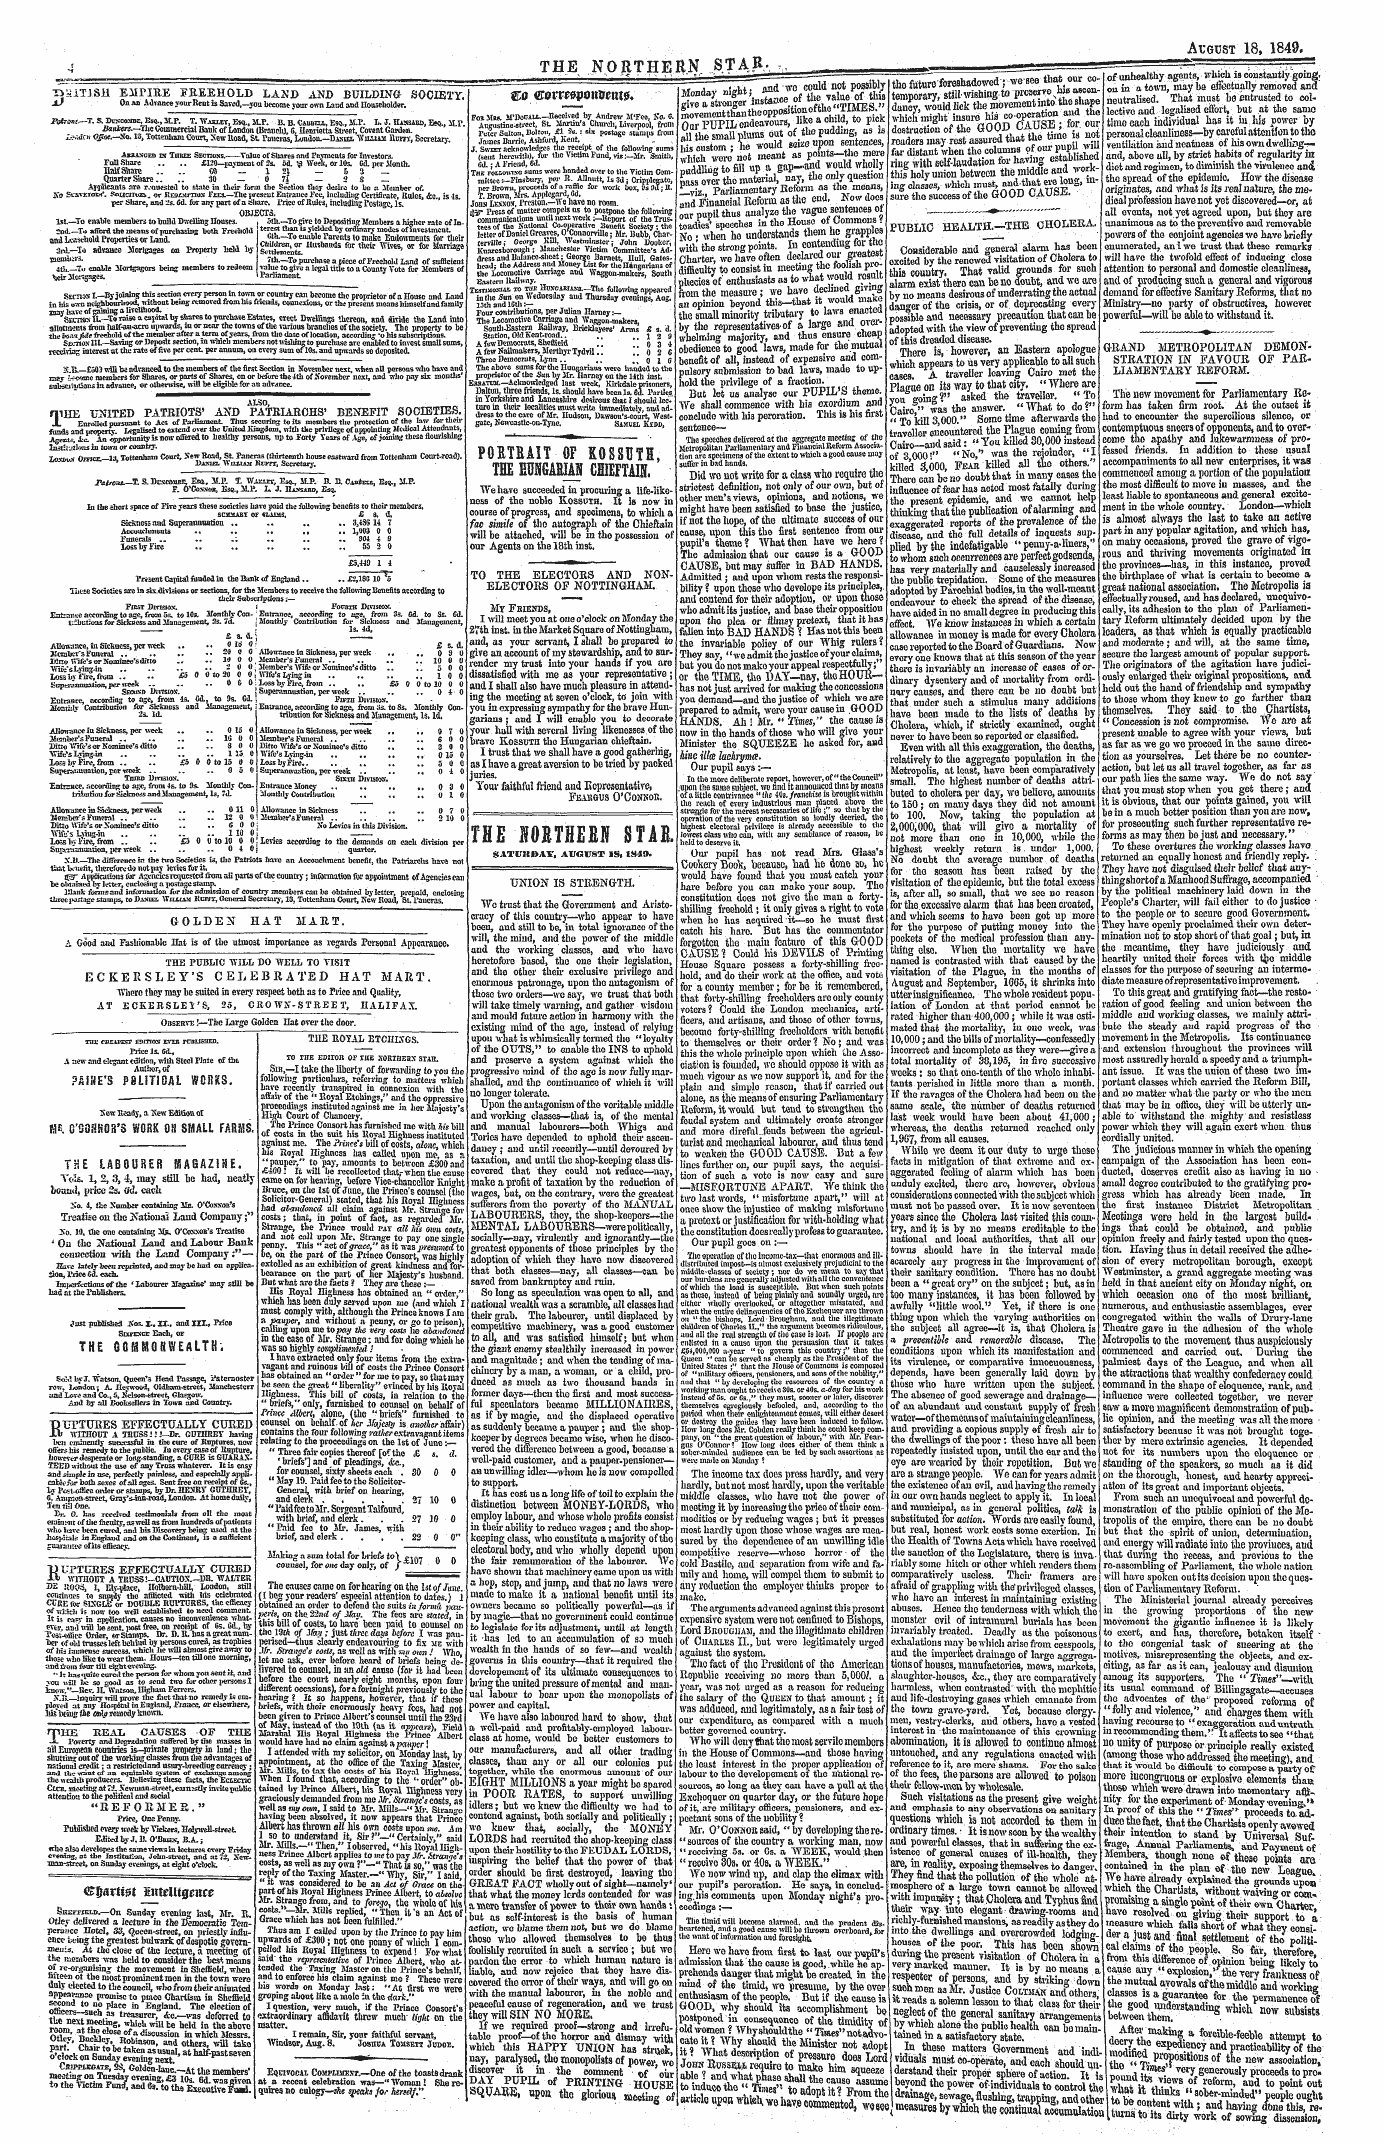 Northern Star (1837-1852): jS F Y, 3rd edition - Ad00418